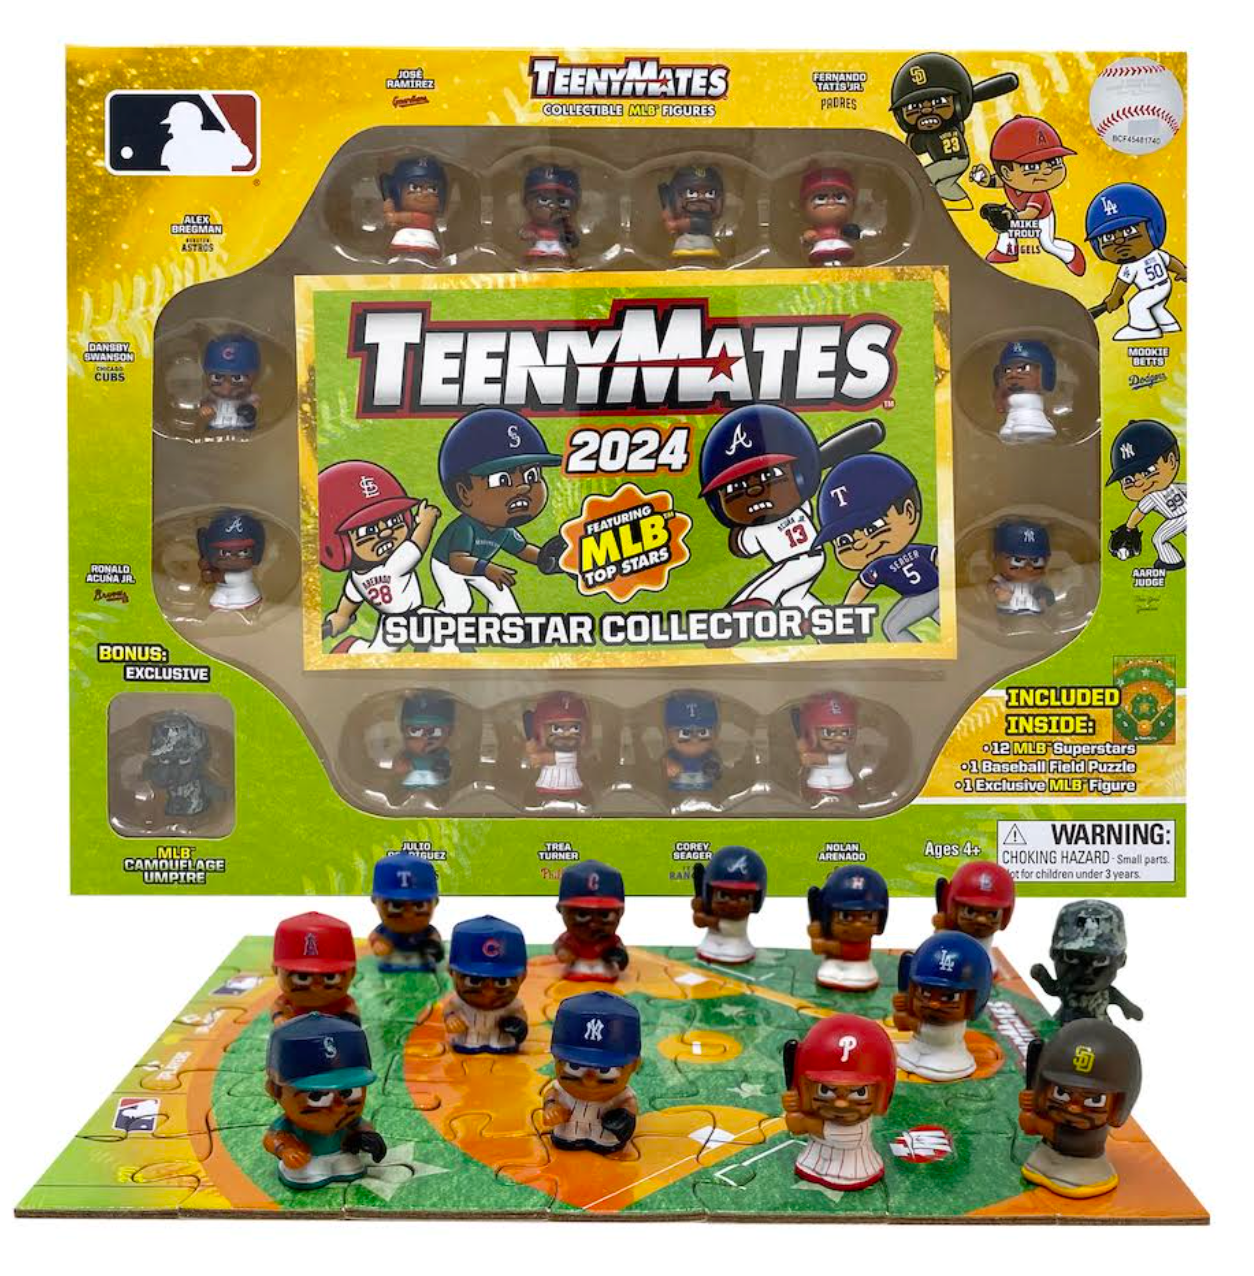 Teeny Mates 2024 MLB gift set